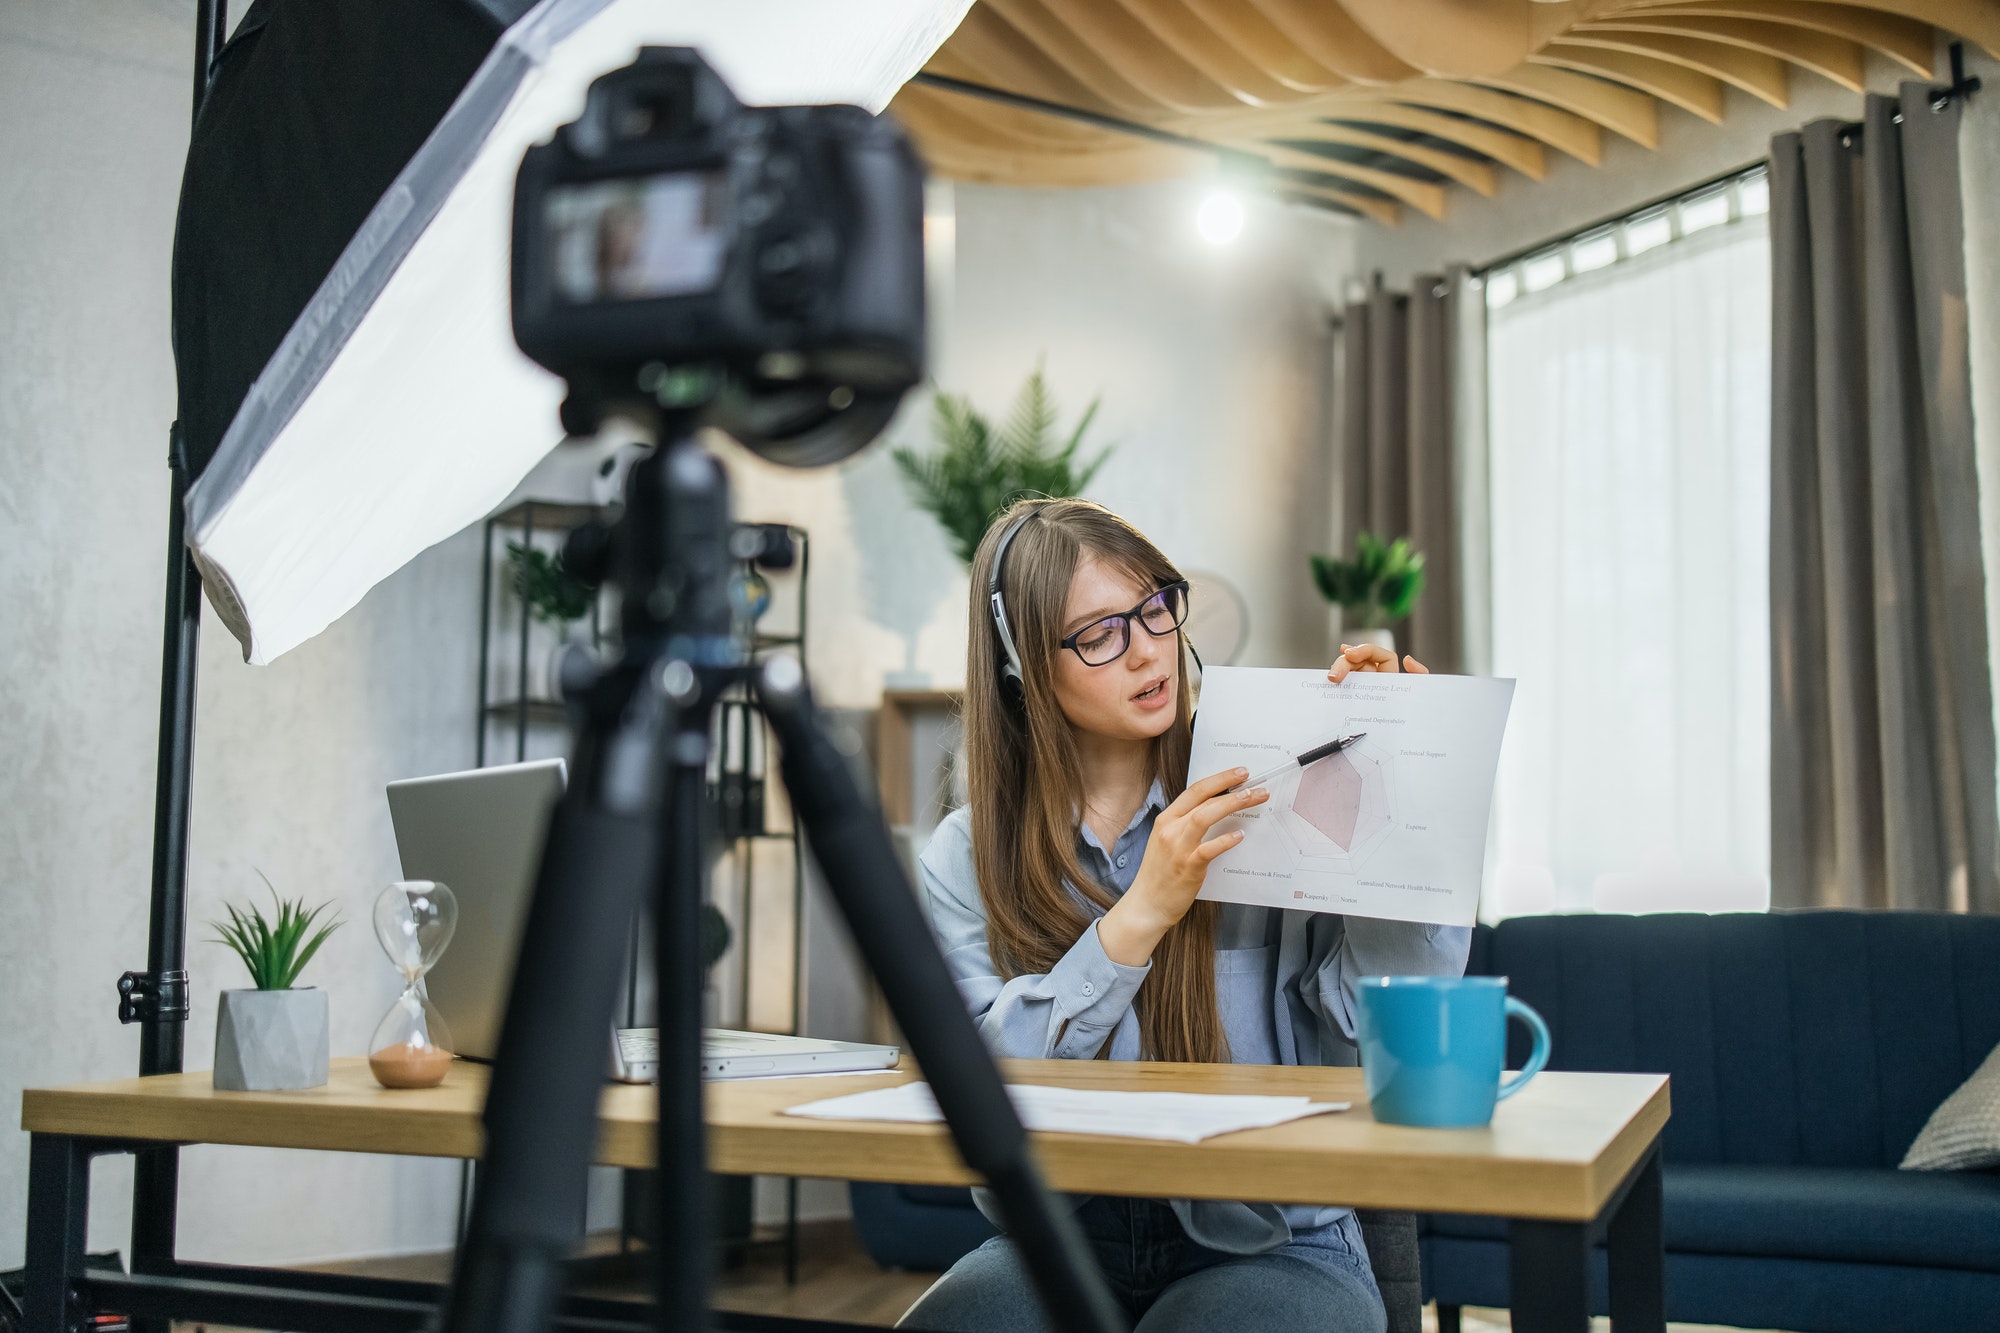 Business woman recording masterclass on video camera